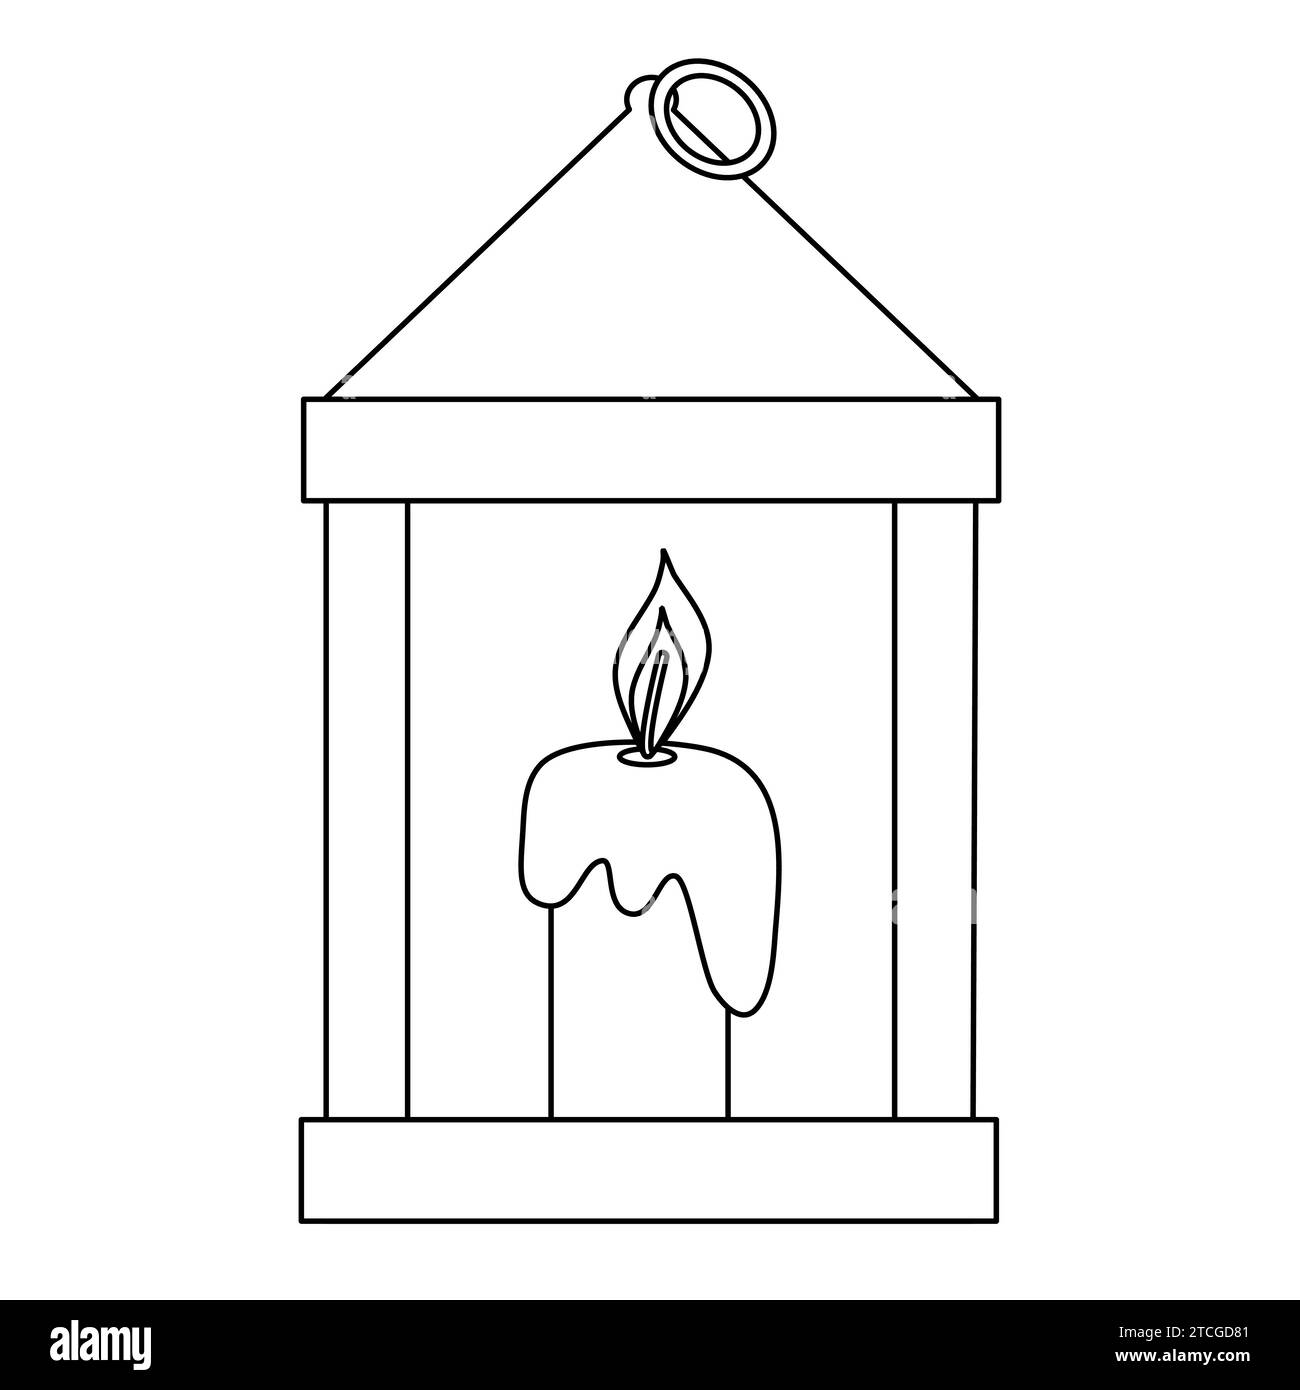 Altmodische Laterne mit brennender Kerze, Vorderansicht, Doodle-Stil flache Vektor-Umrissillustration für Kinder Malbuch Stock Vektor